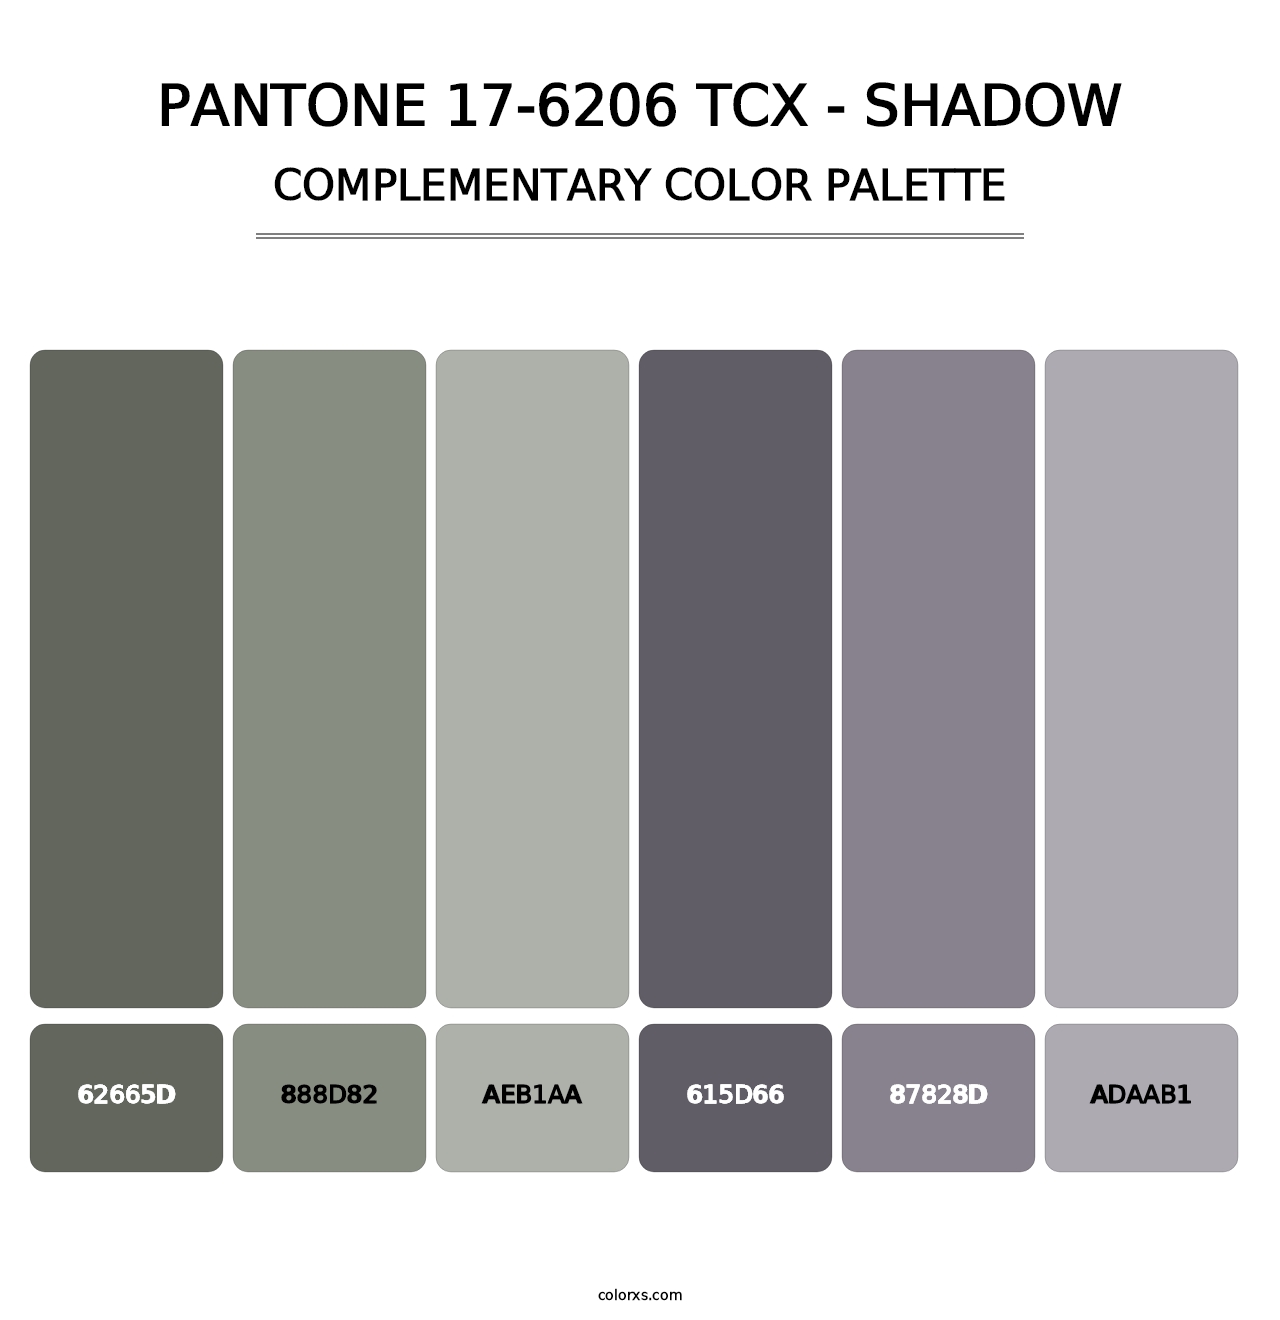 PANTONE 17-6206 TCX - Shadow - Complementary Color Palette